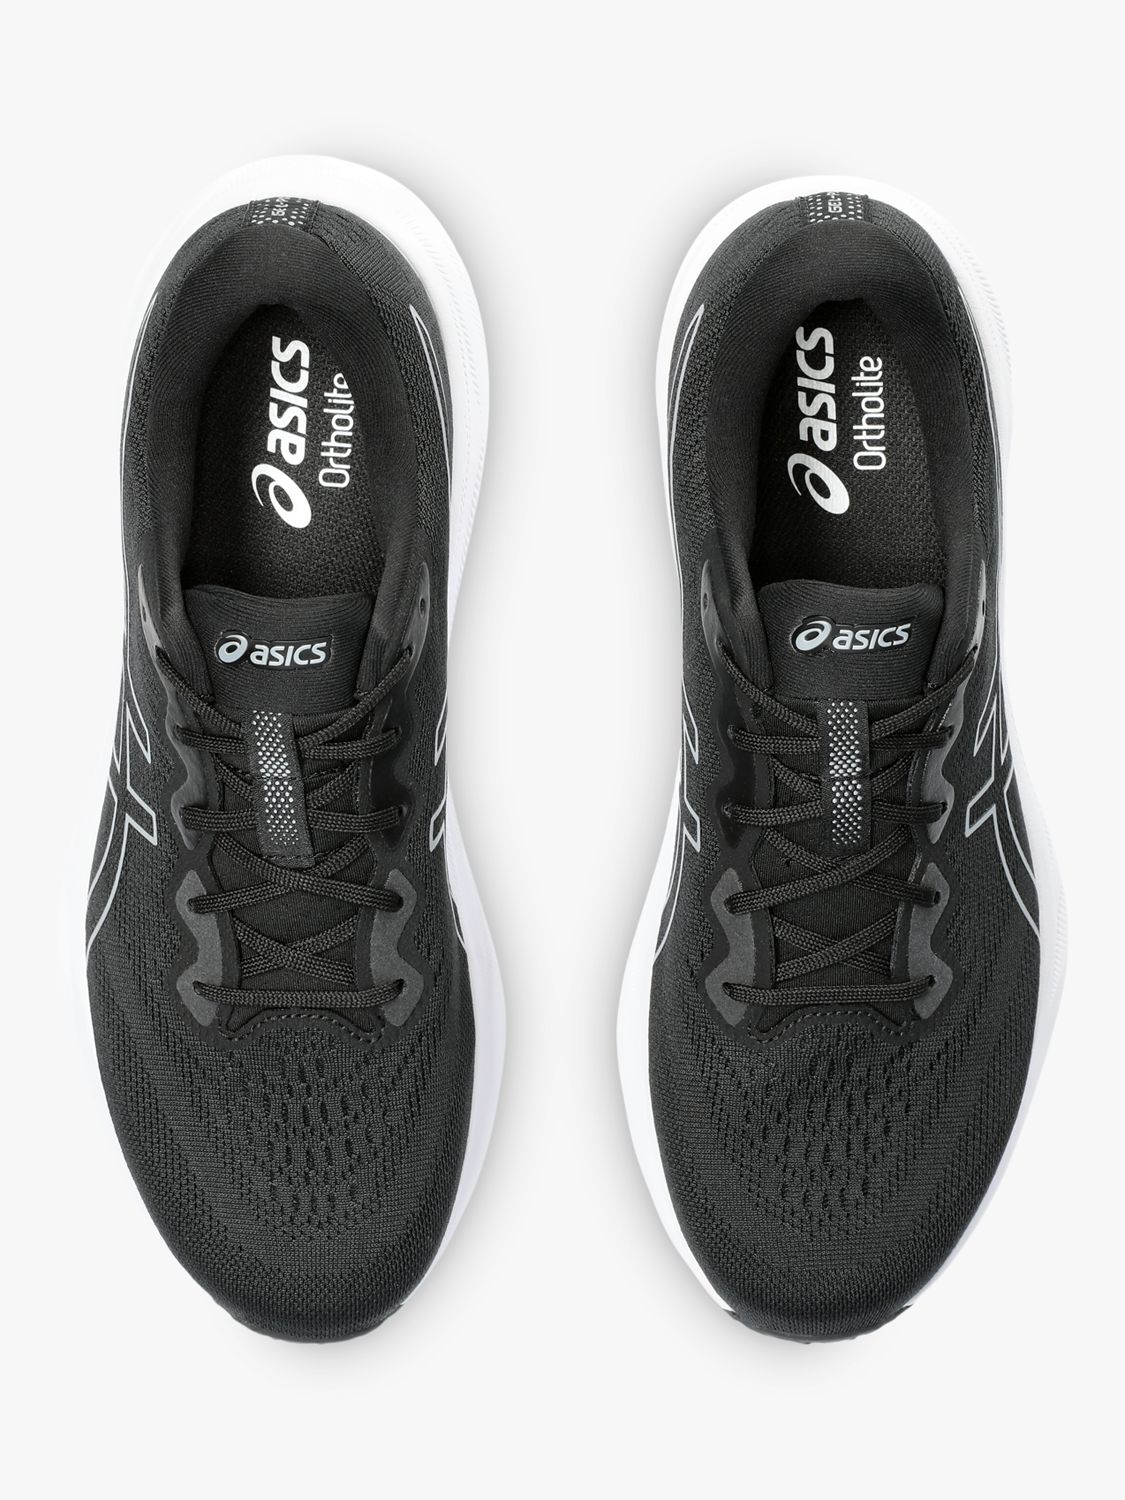 ASICS GEL-PULSE 15 Men's Running Shoes, Black/Sheet Rock, 7